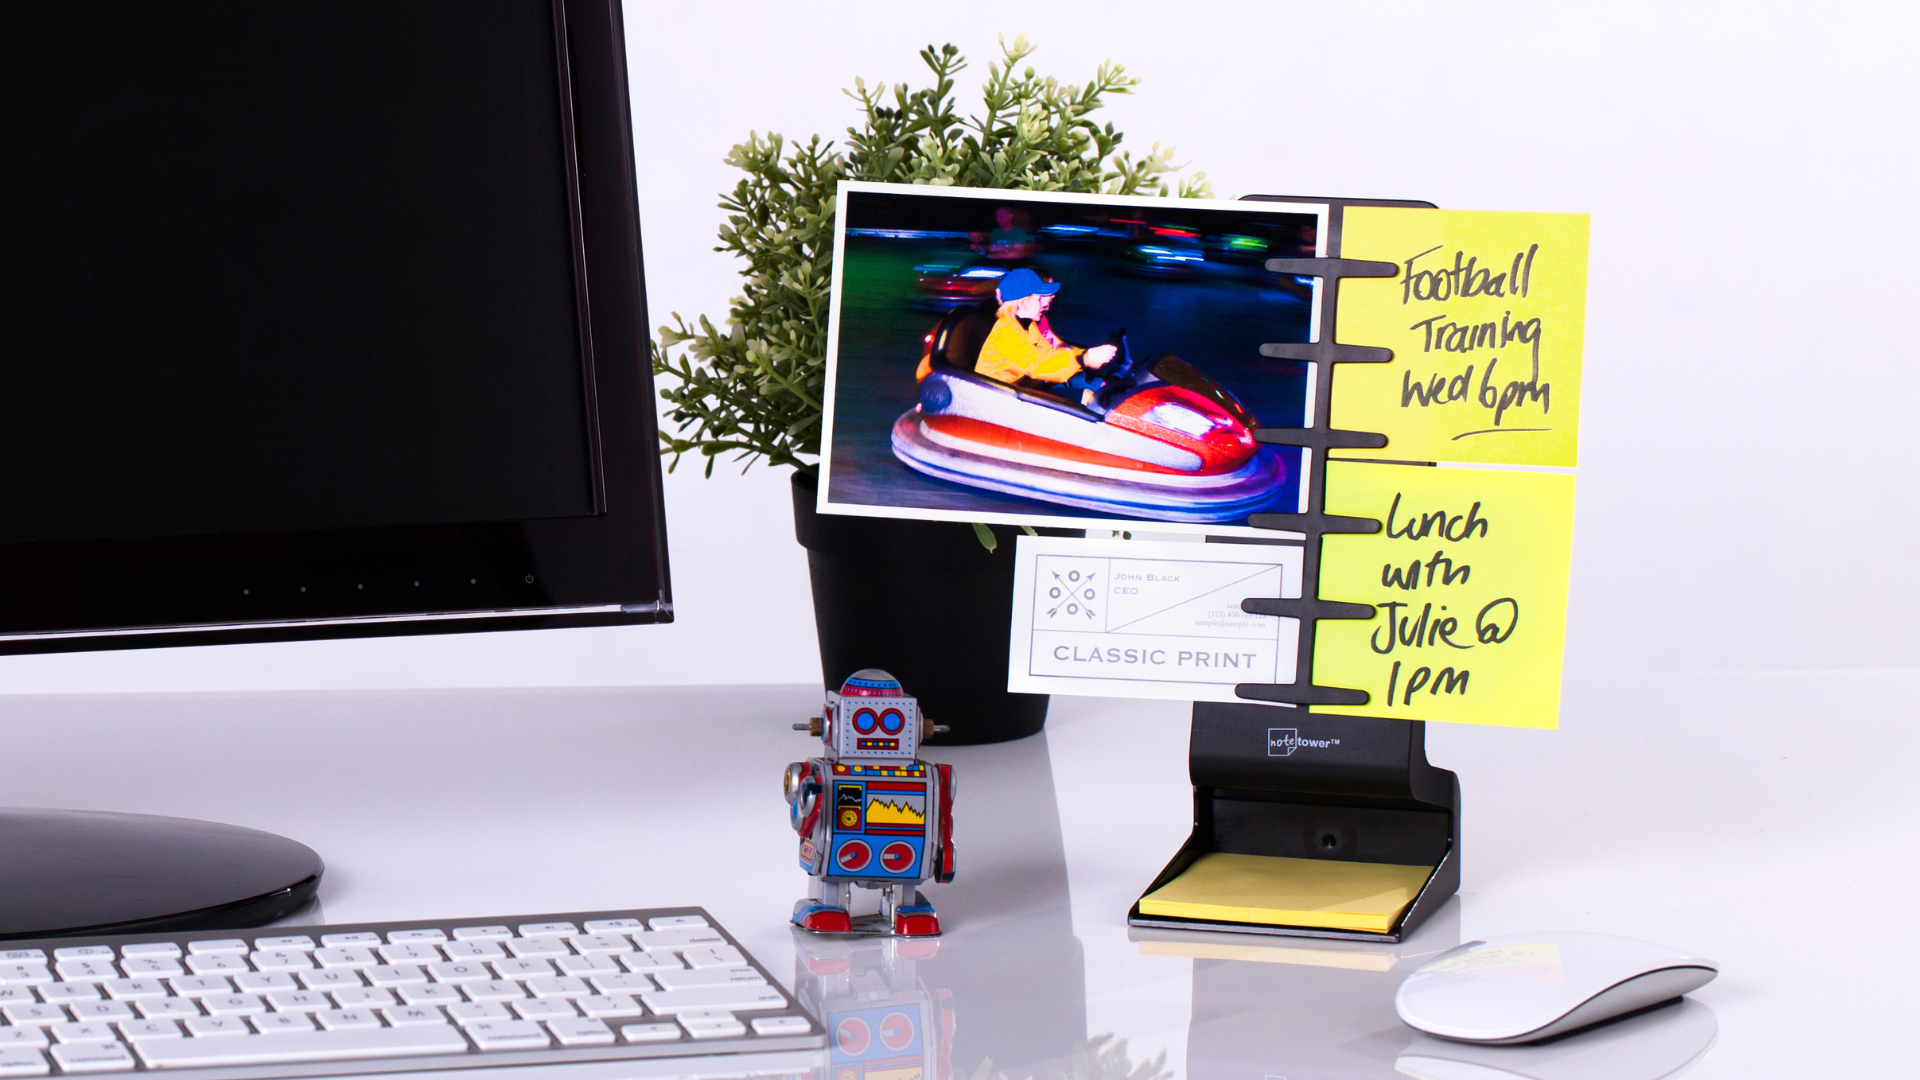 NoteTower Desktop Mini - Note and Photos holder. Organizes sticky notes, displays favorite photos